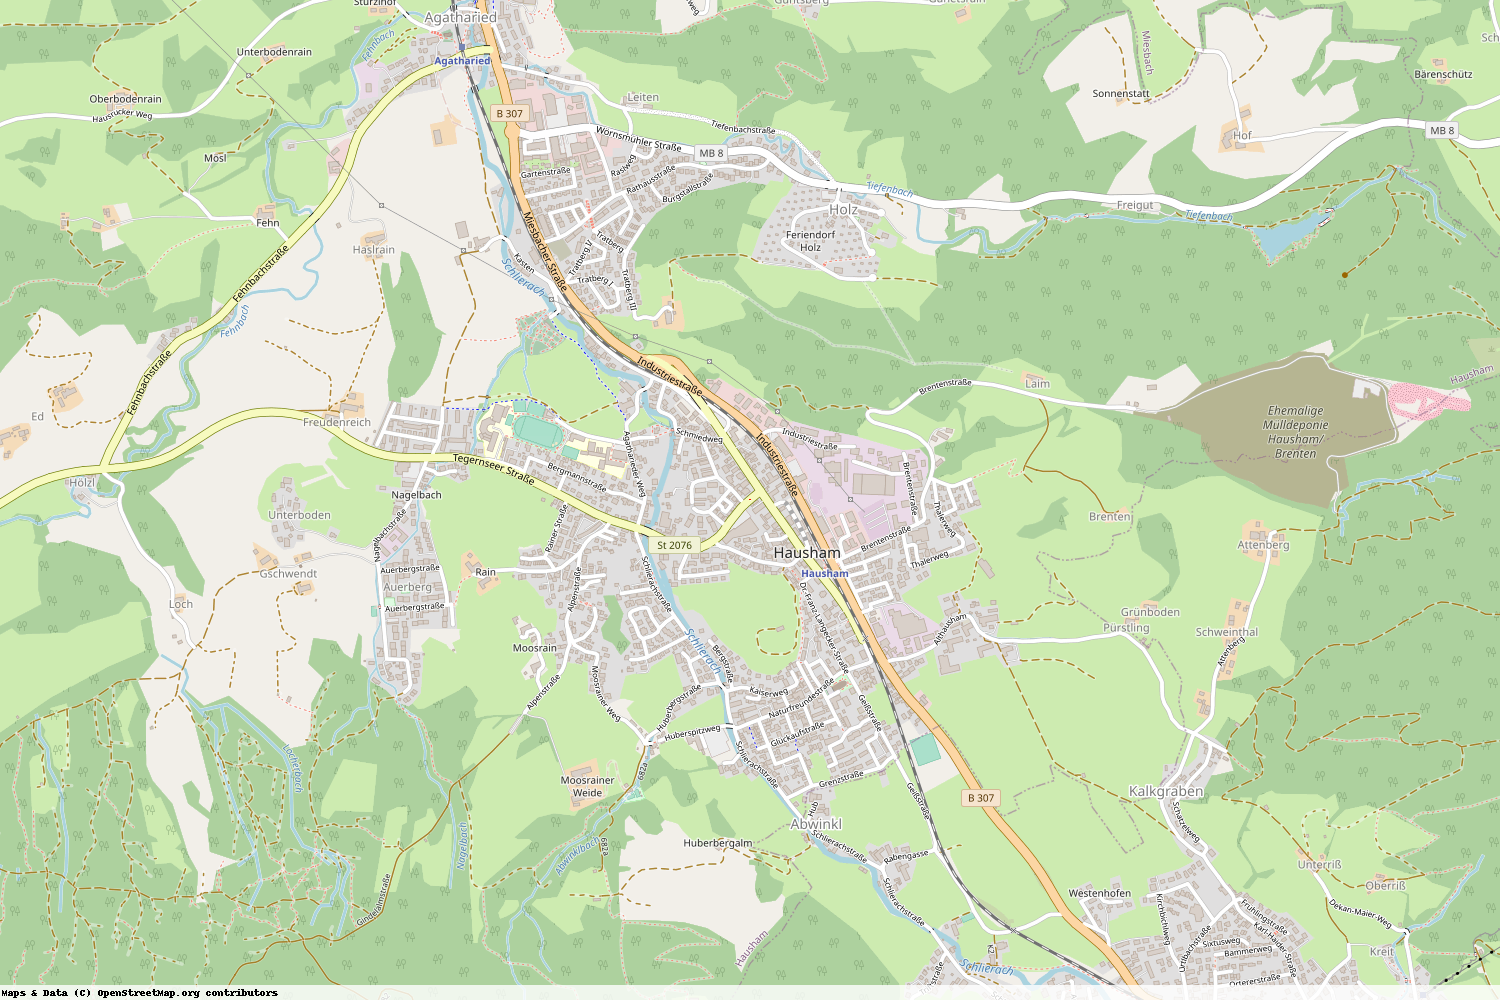 Ist gerade Stromausfall in Bayern - Miesbach - Hausham?